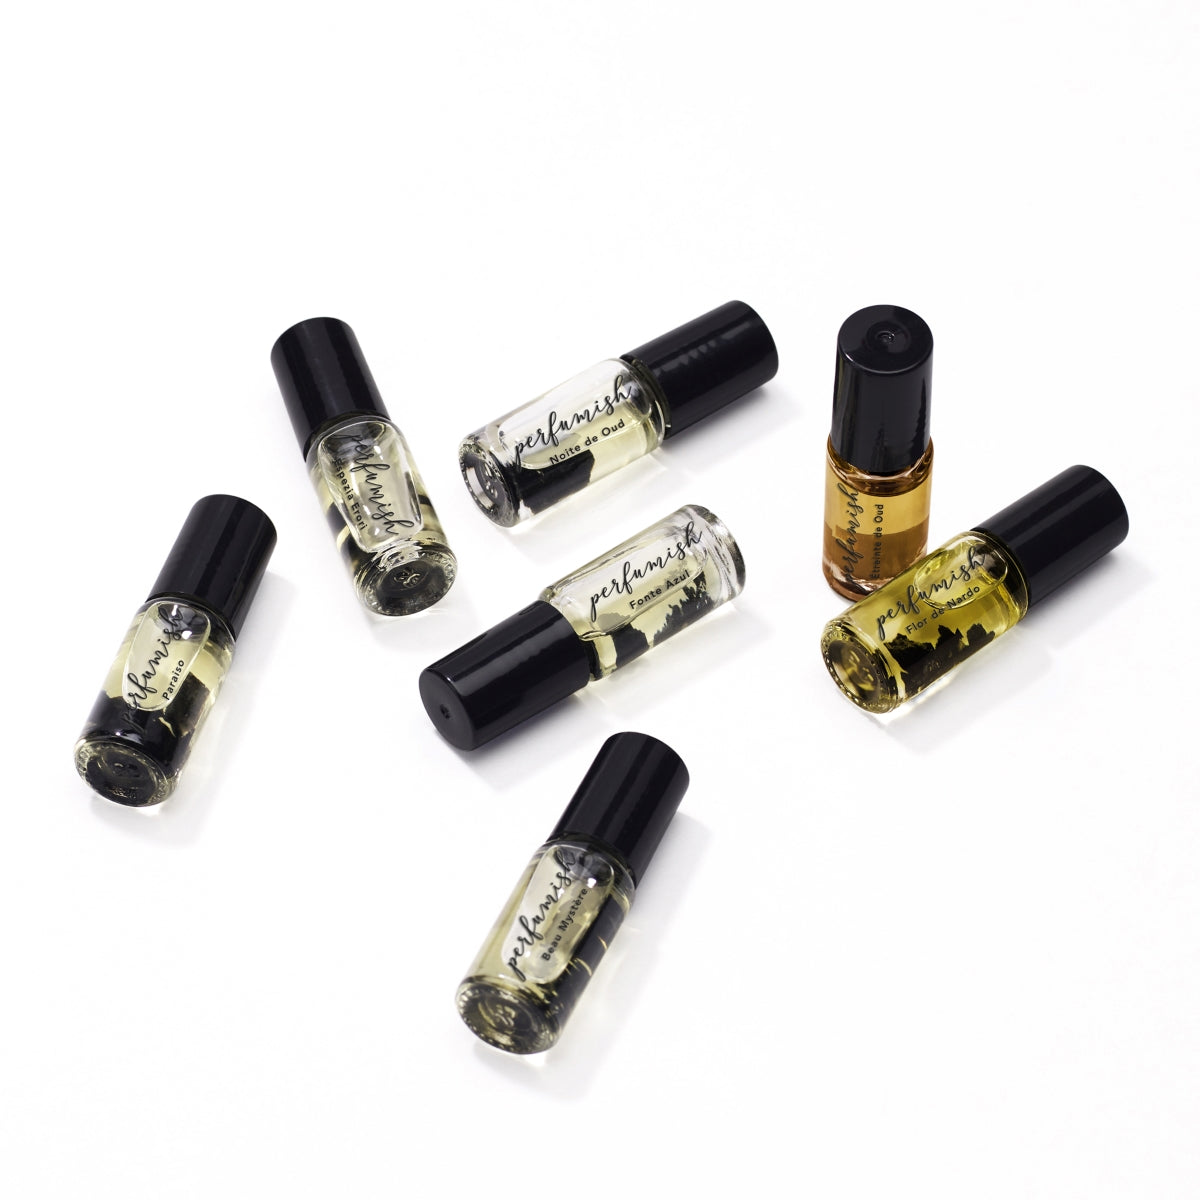 Aficionado Perfume Gift Set of Roll On Fragrances (Set of 7)